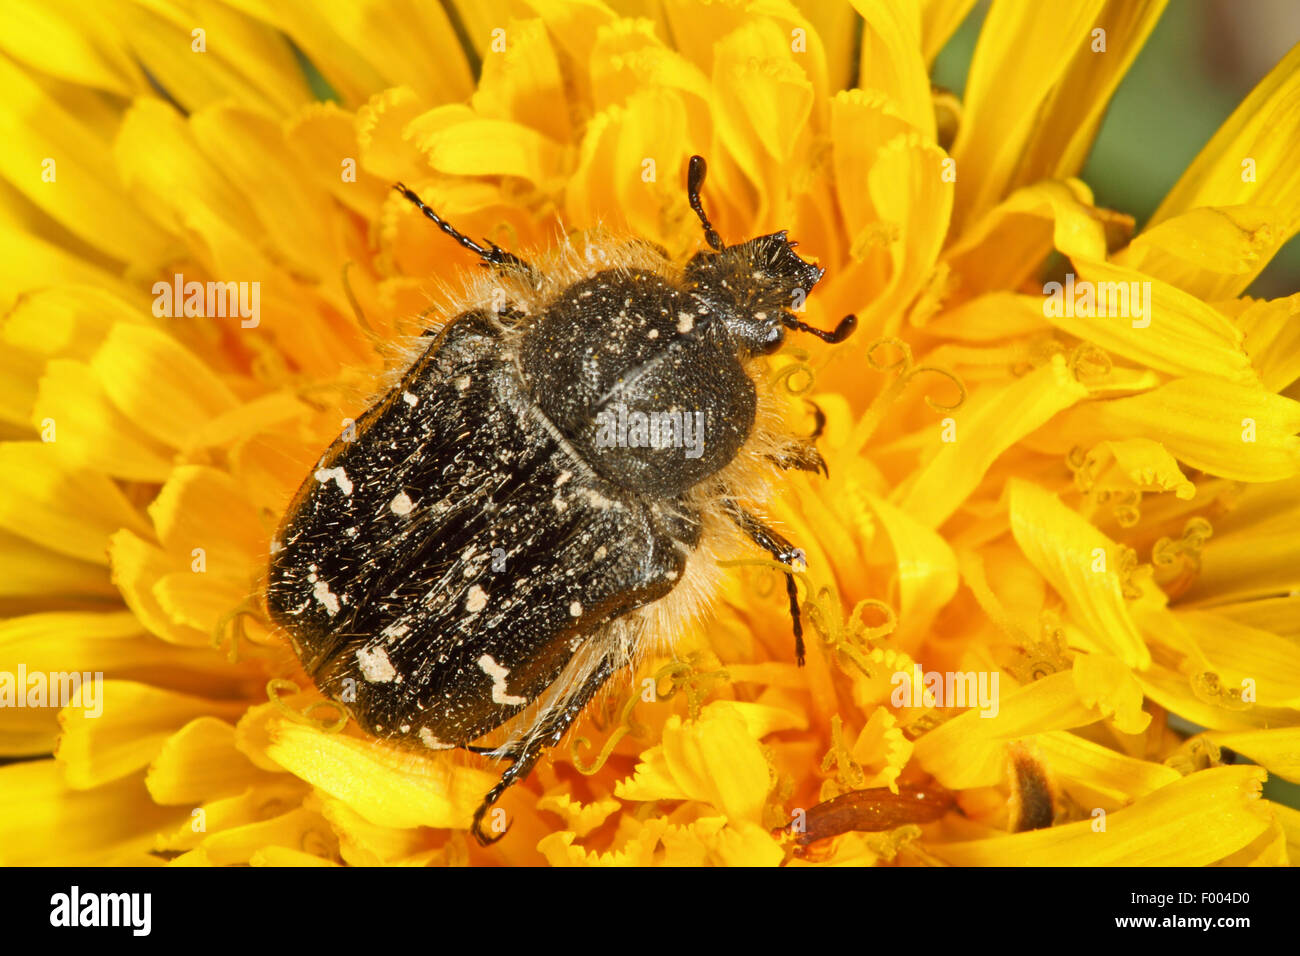 Hairy beetle, Apple blossom beetle (Tropinota hirta, Epicometis hirta), on a yellow flower, Germany Stock Photo